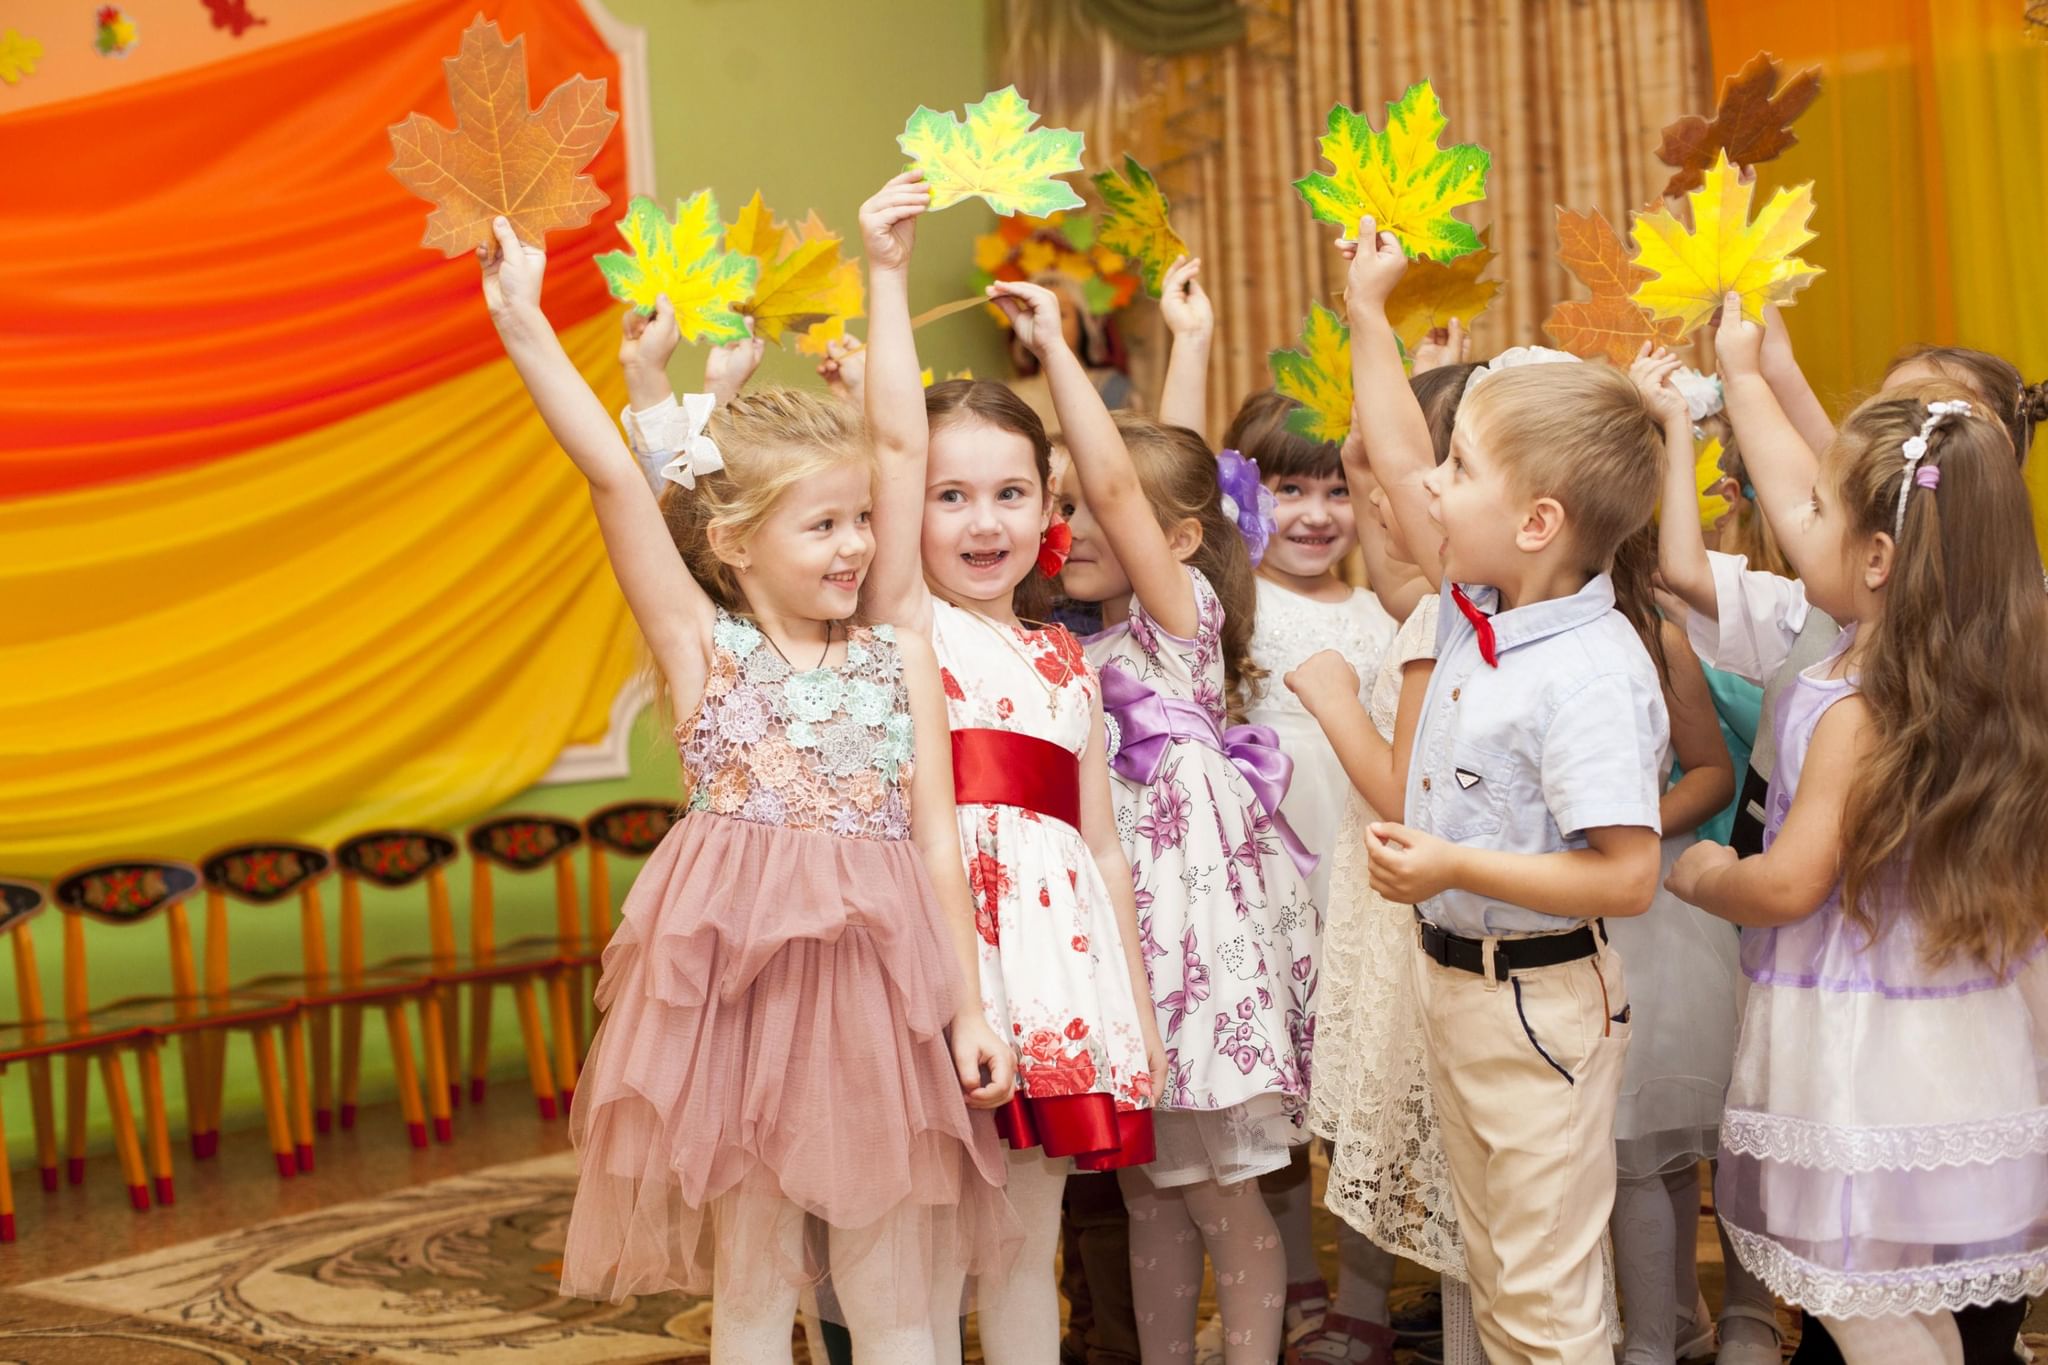 Фото с праздника осени в детском саду